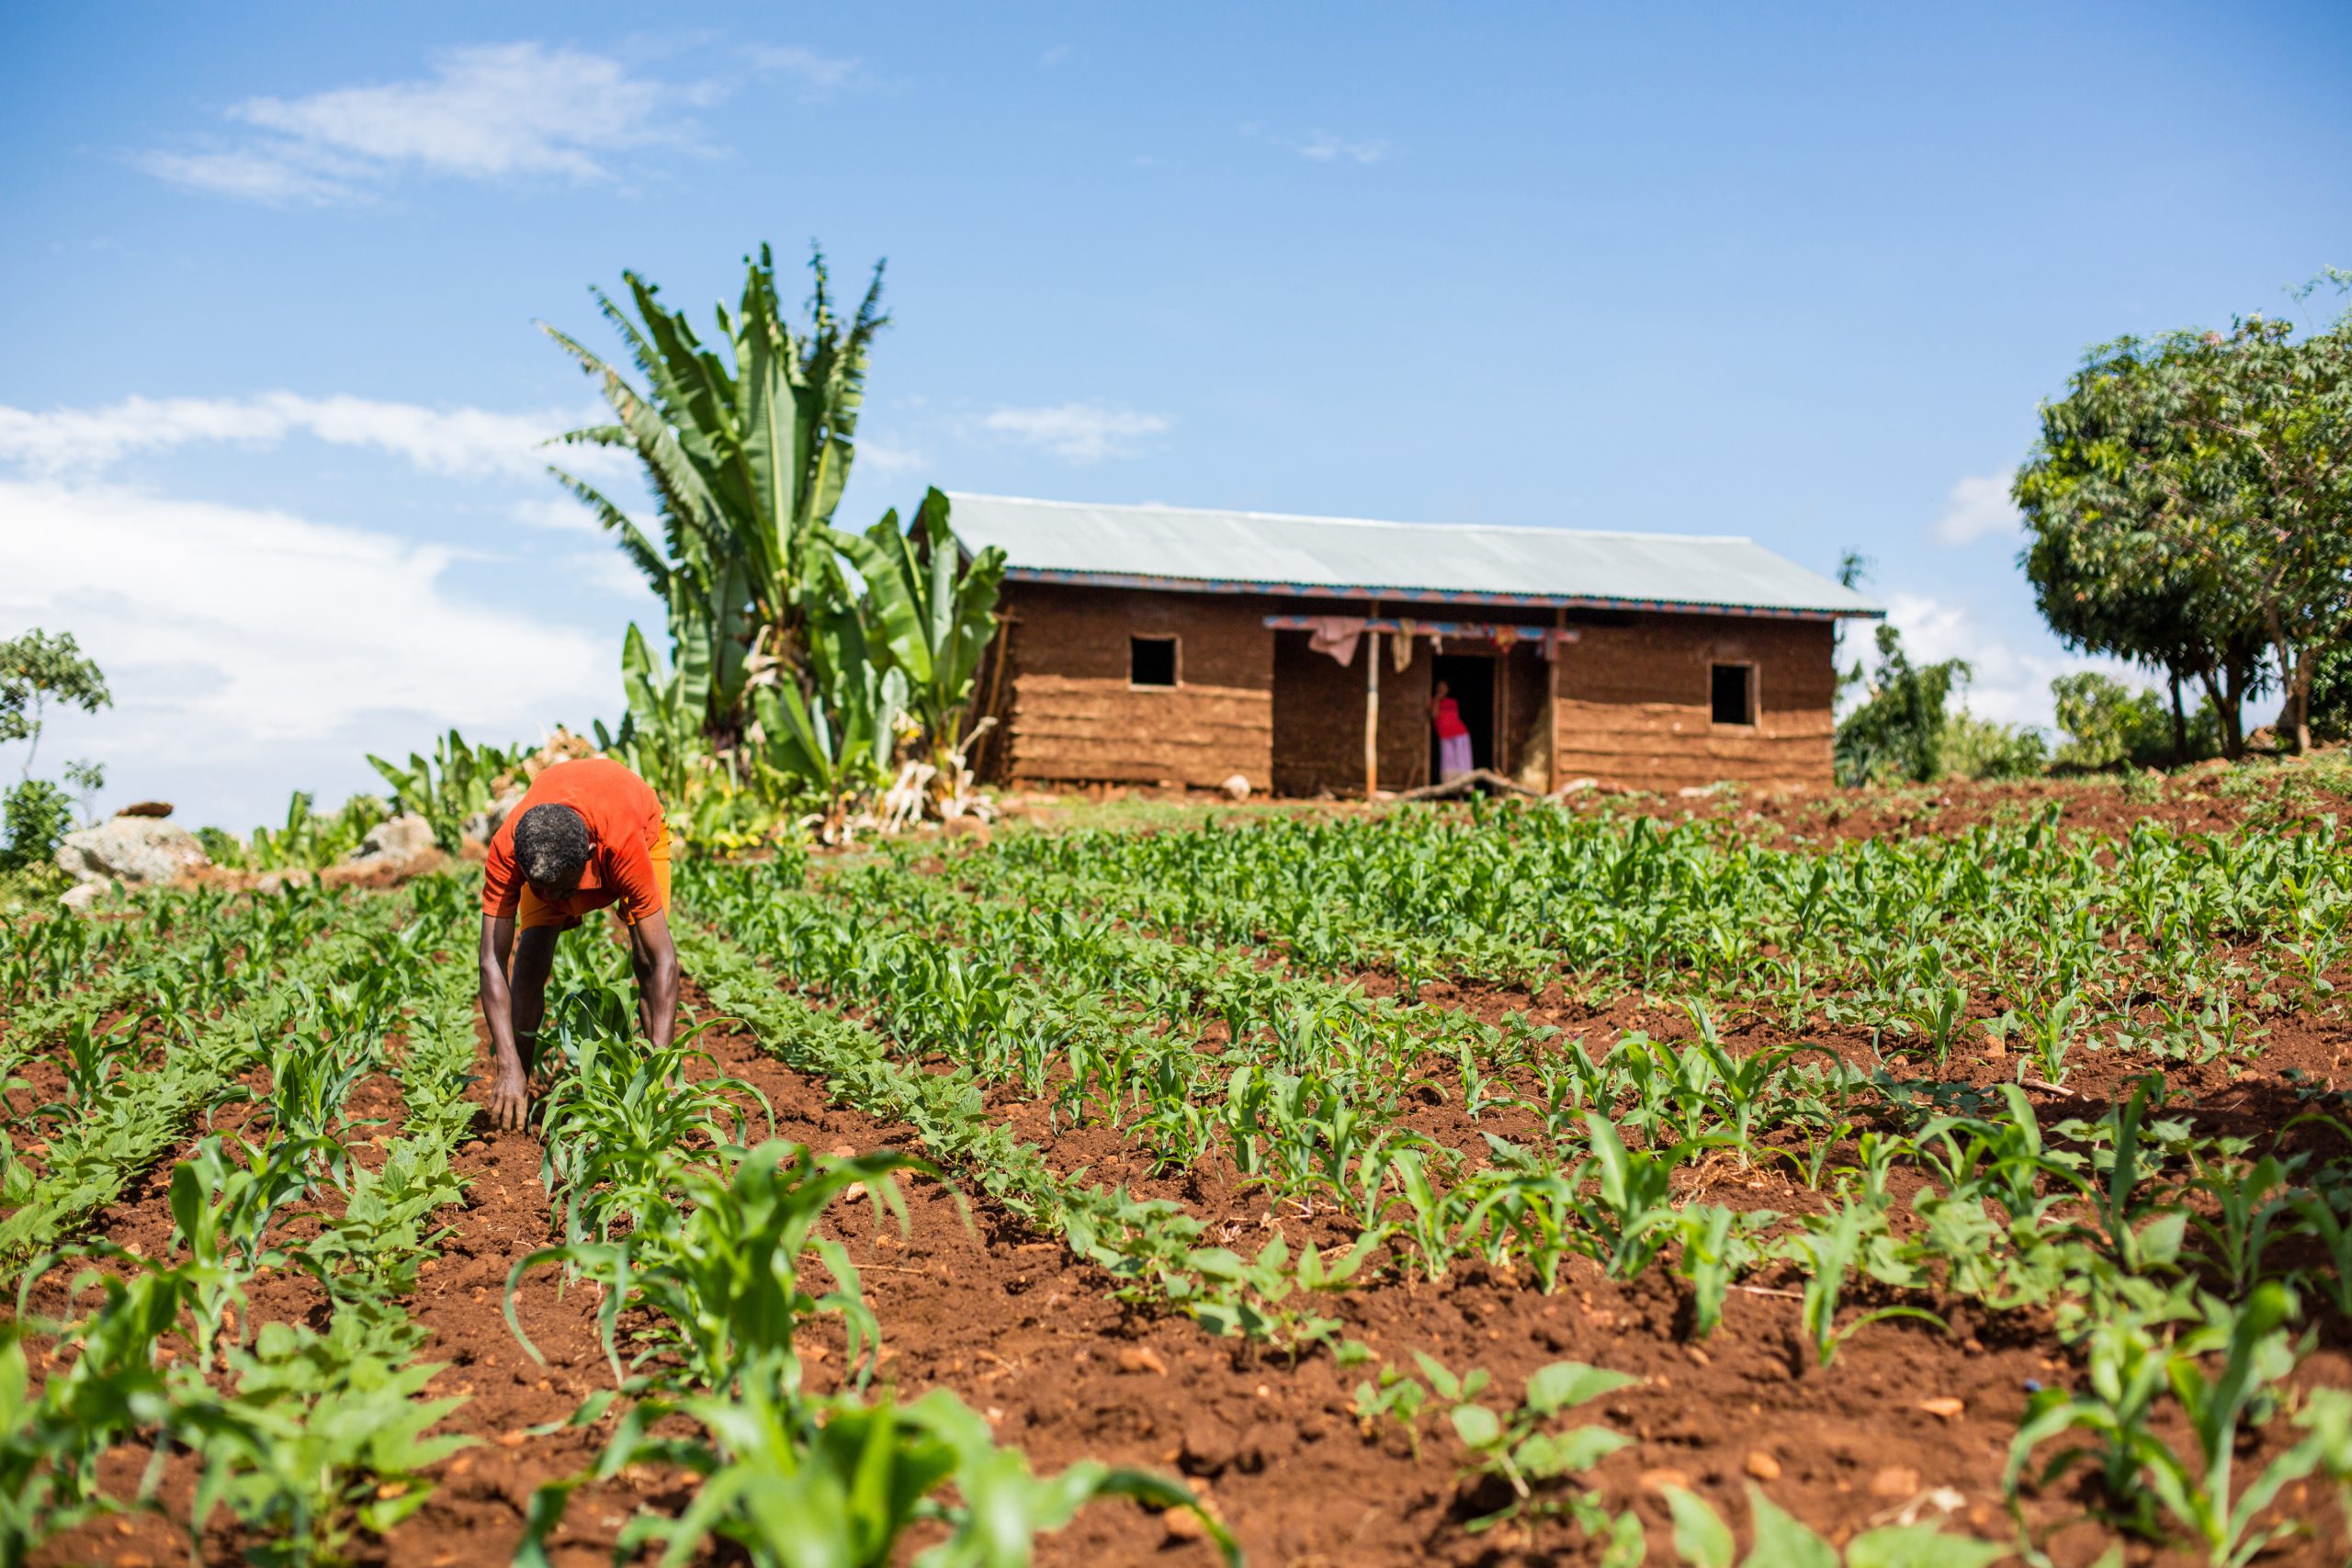 Transforming Rural Economies Through Professional Farmer Organizations